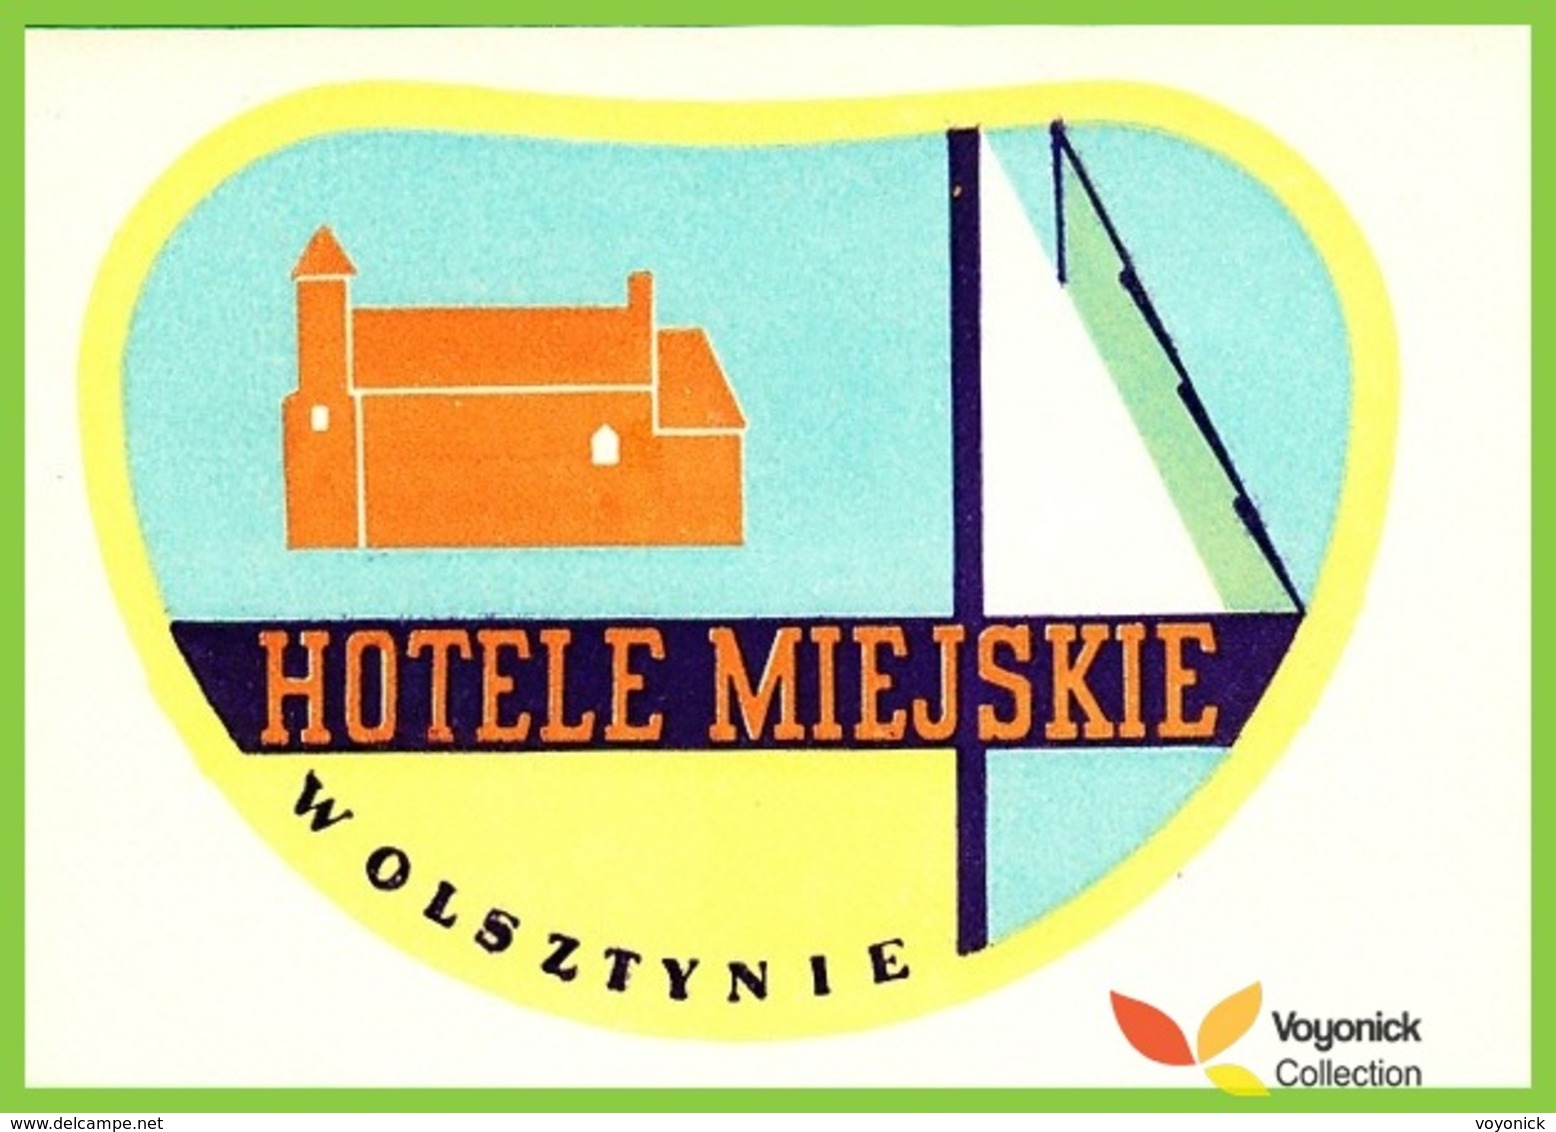 Voyo HOTELE MIEJSKIE Olsztyn Poland Hotel Label 1970s Vintage - Hotelaufkleber